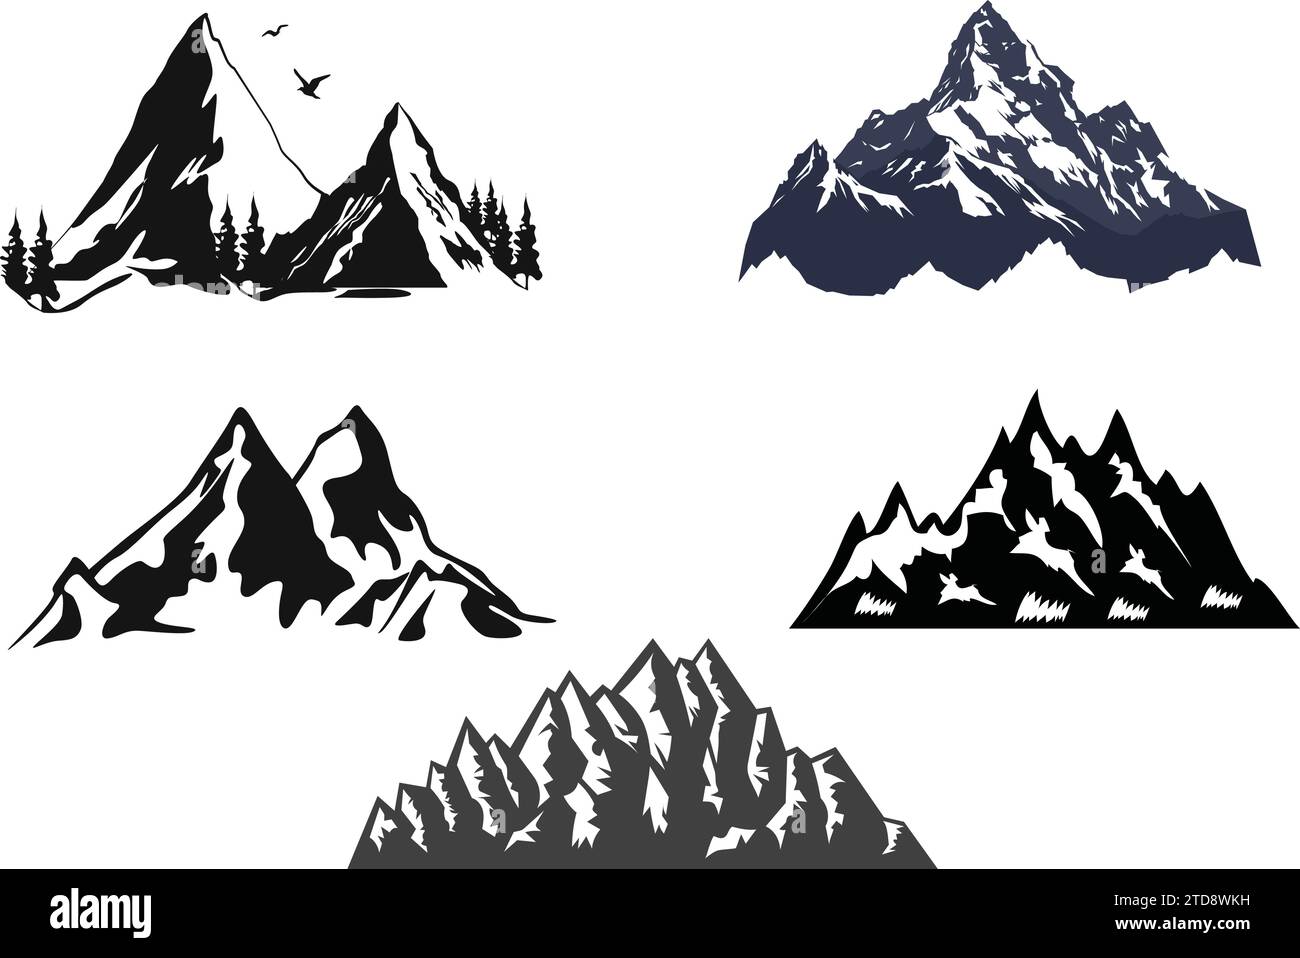 Vektor-Illustration des Farbgipfels des felsigen Berges Symbolsatz Stock Vektor